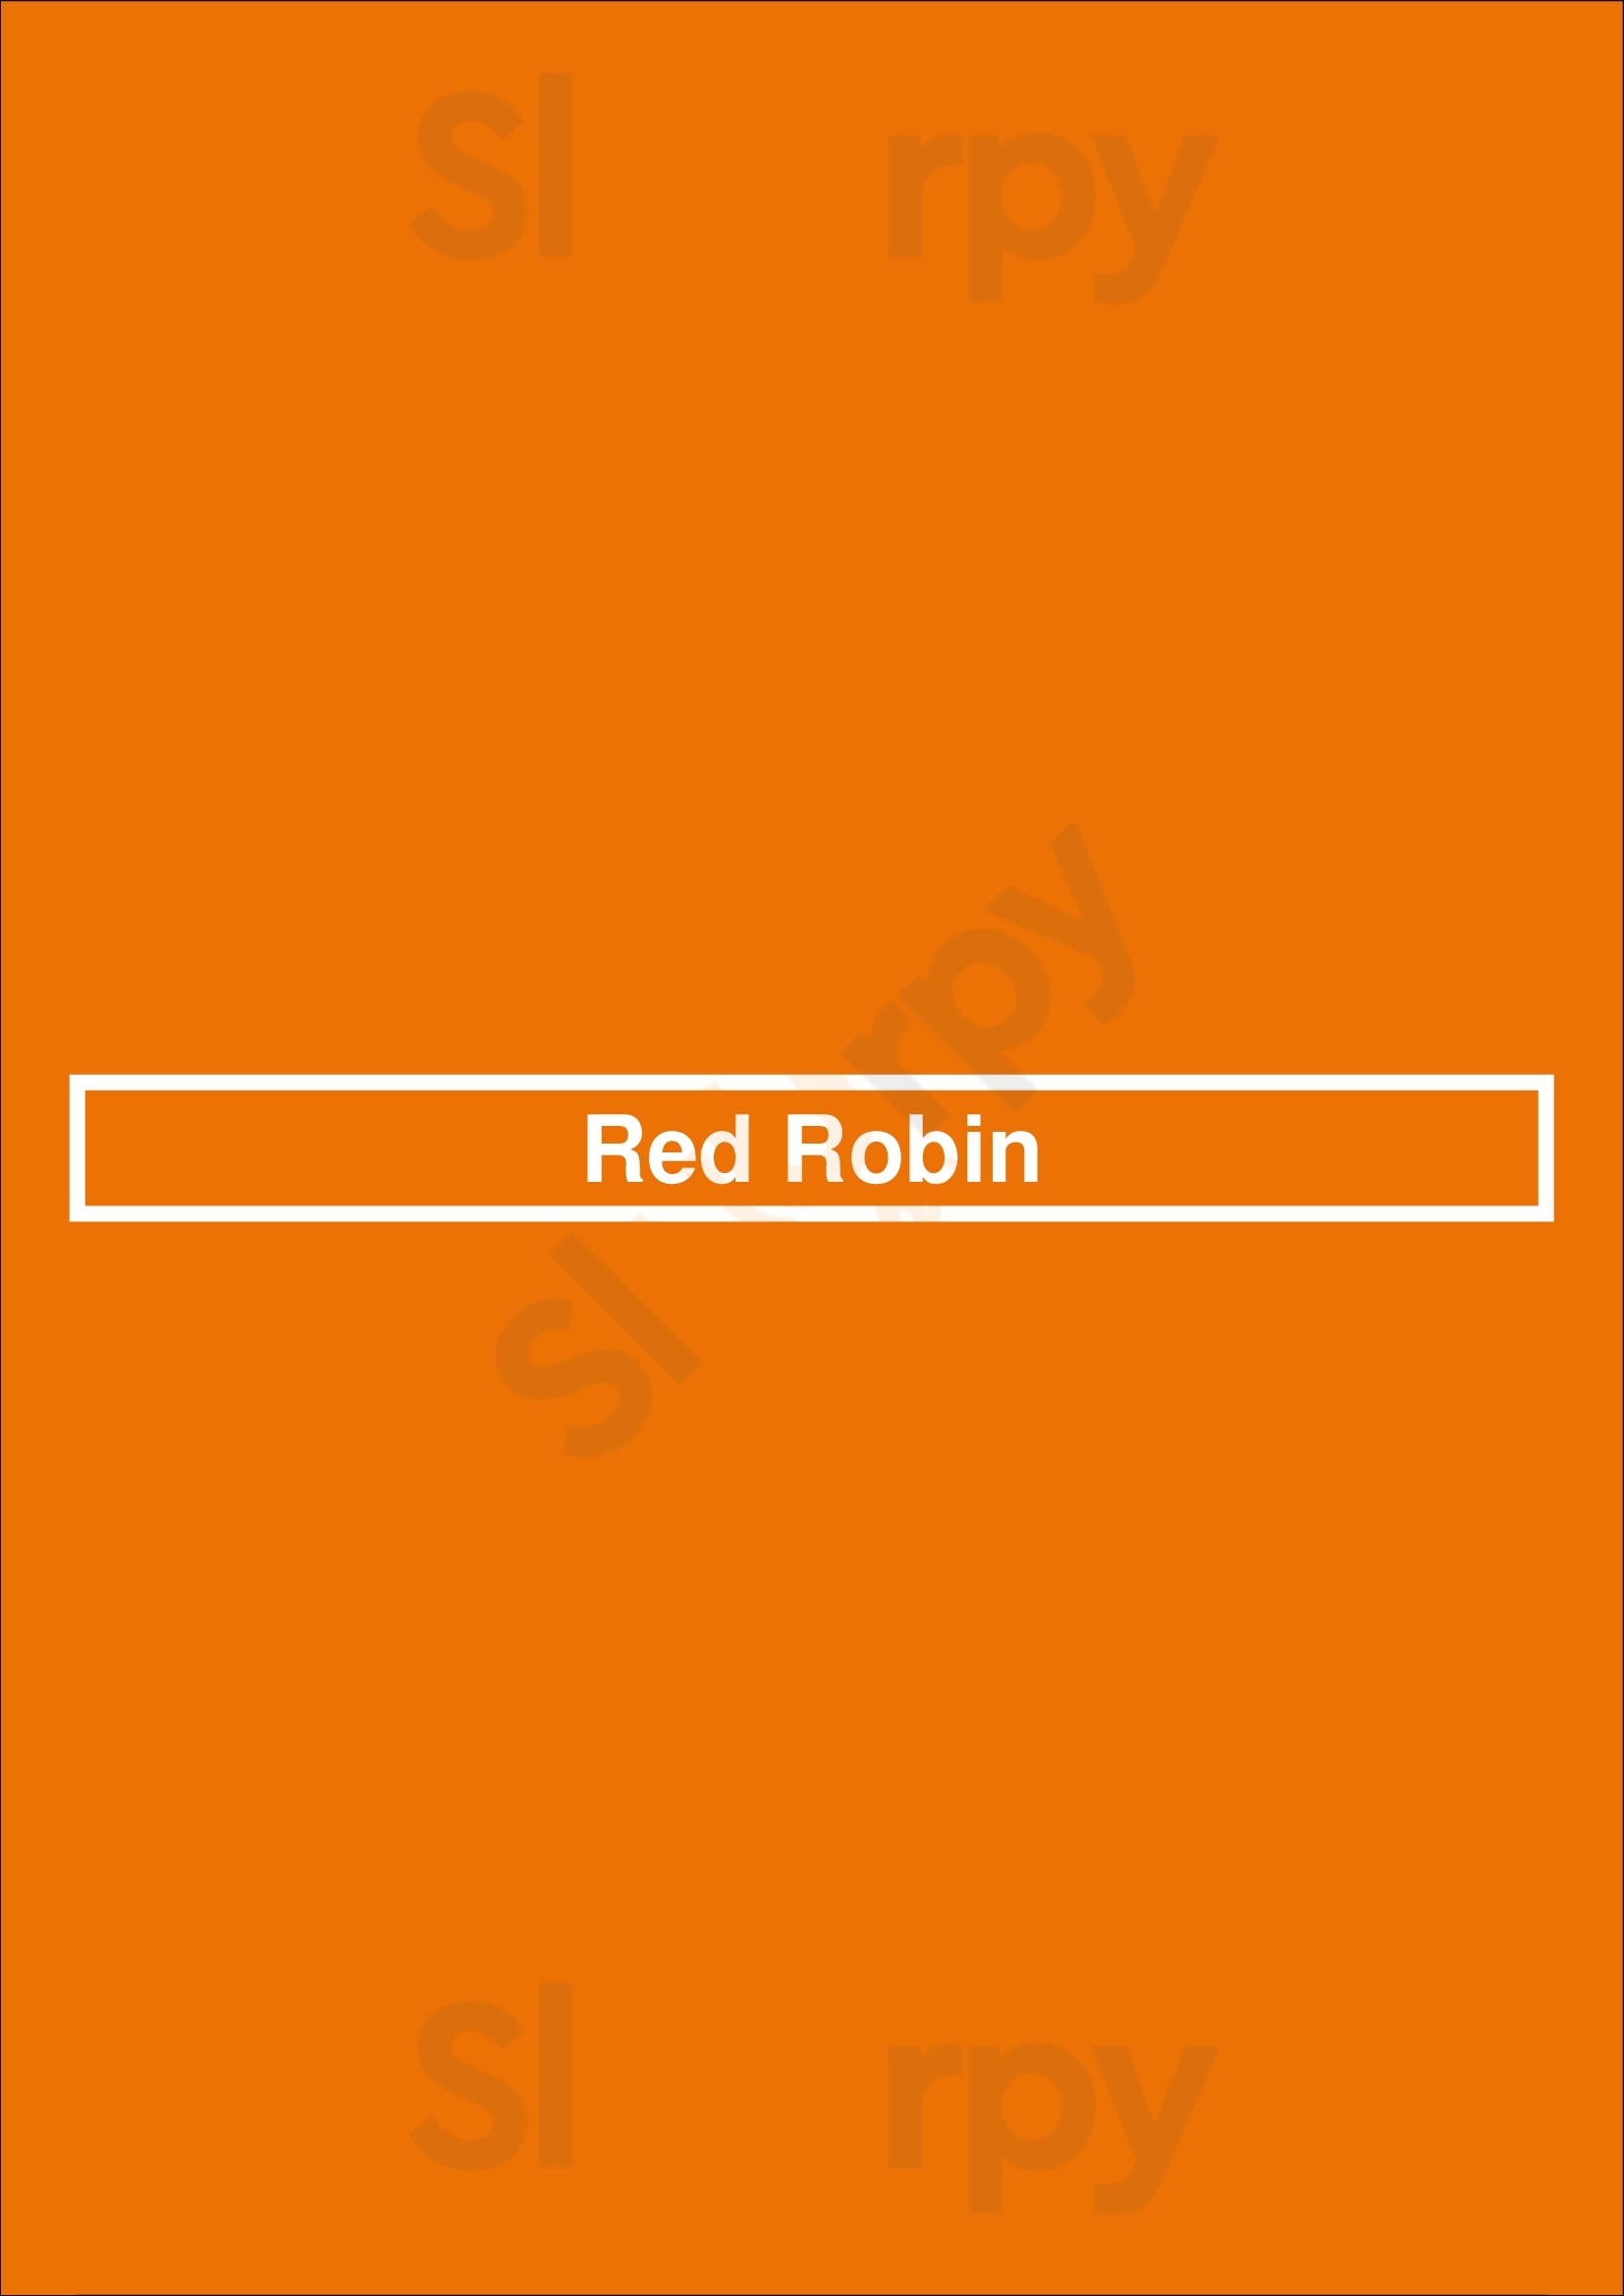 Red Robin Milpitas Menu - 1